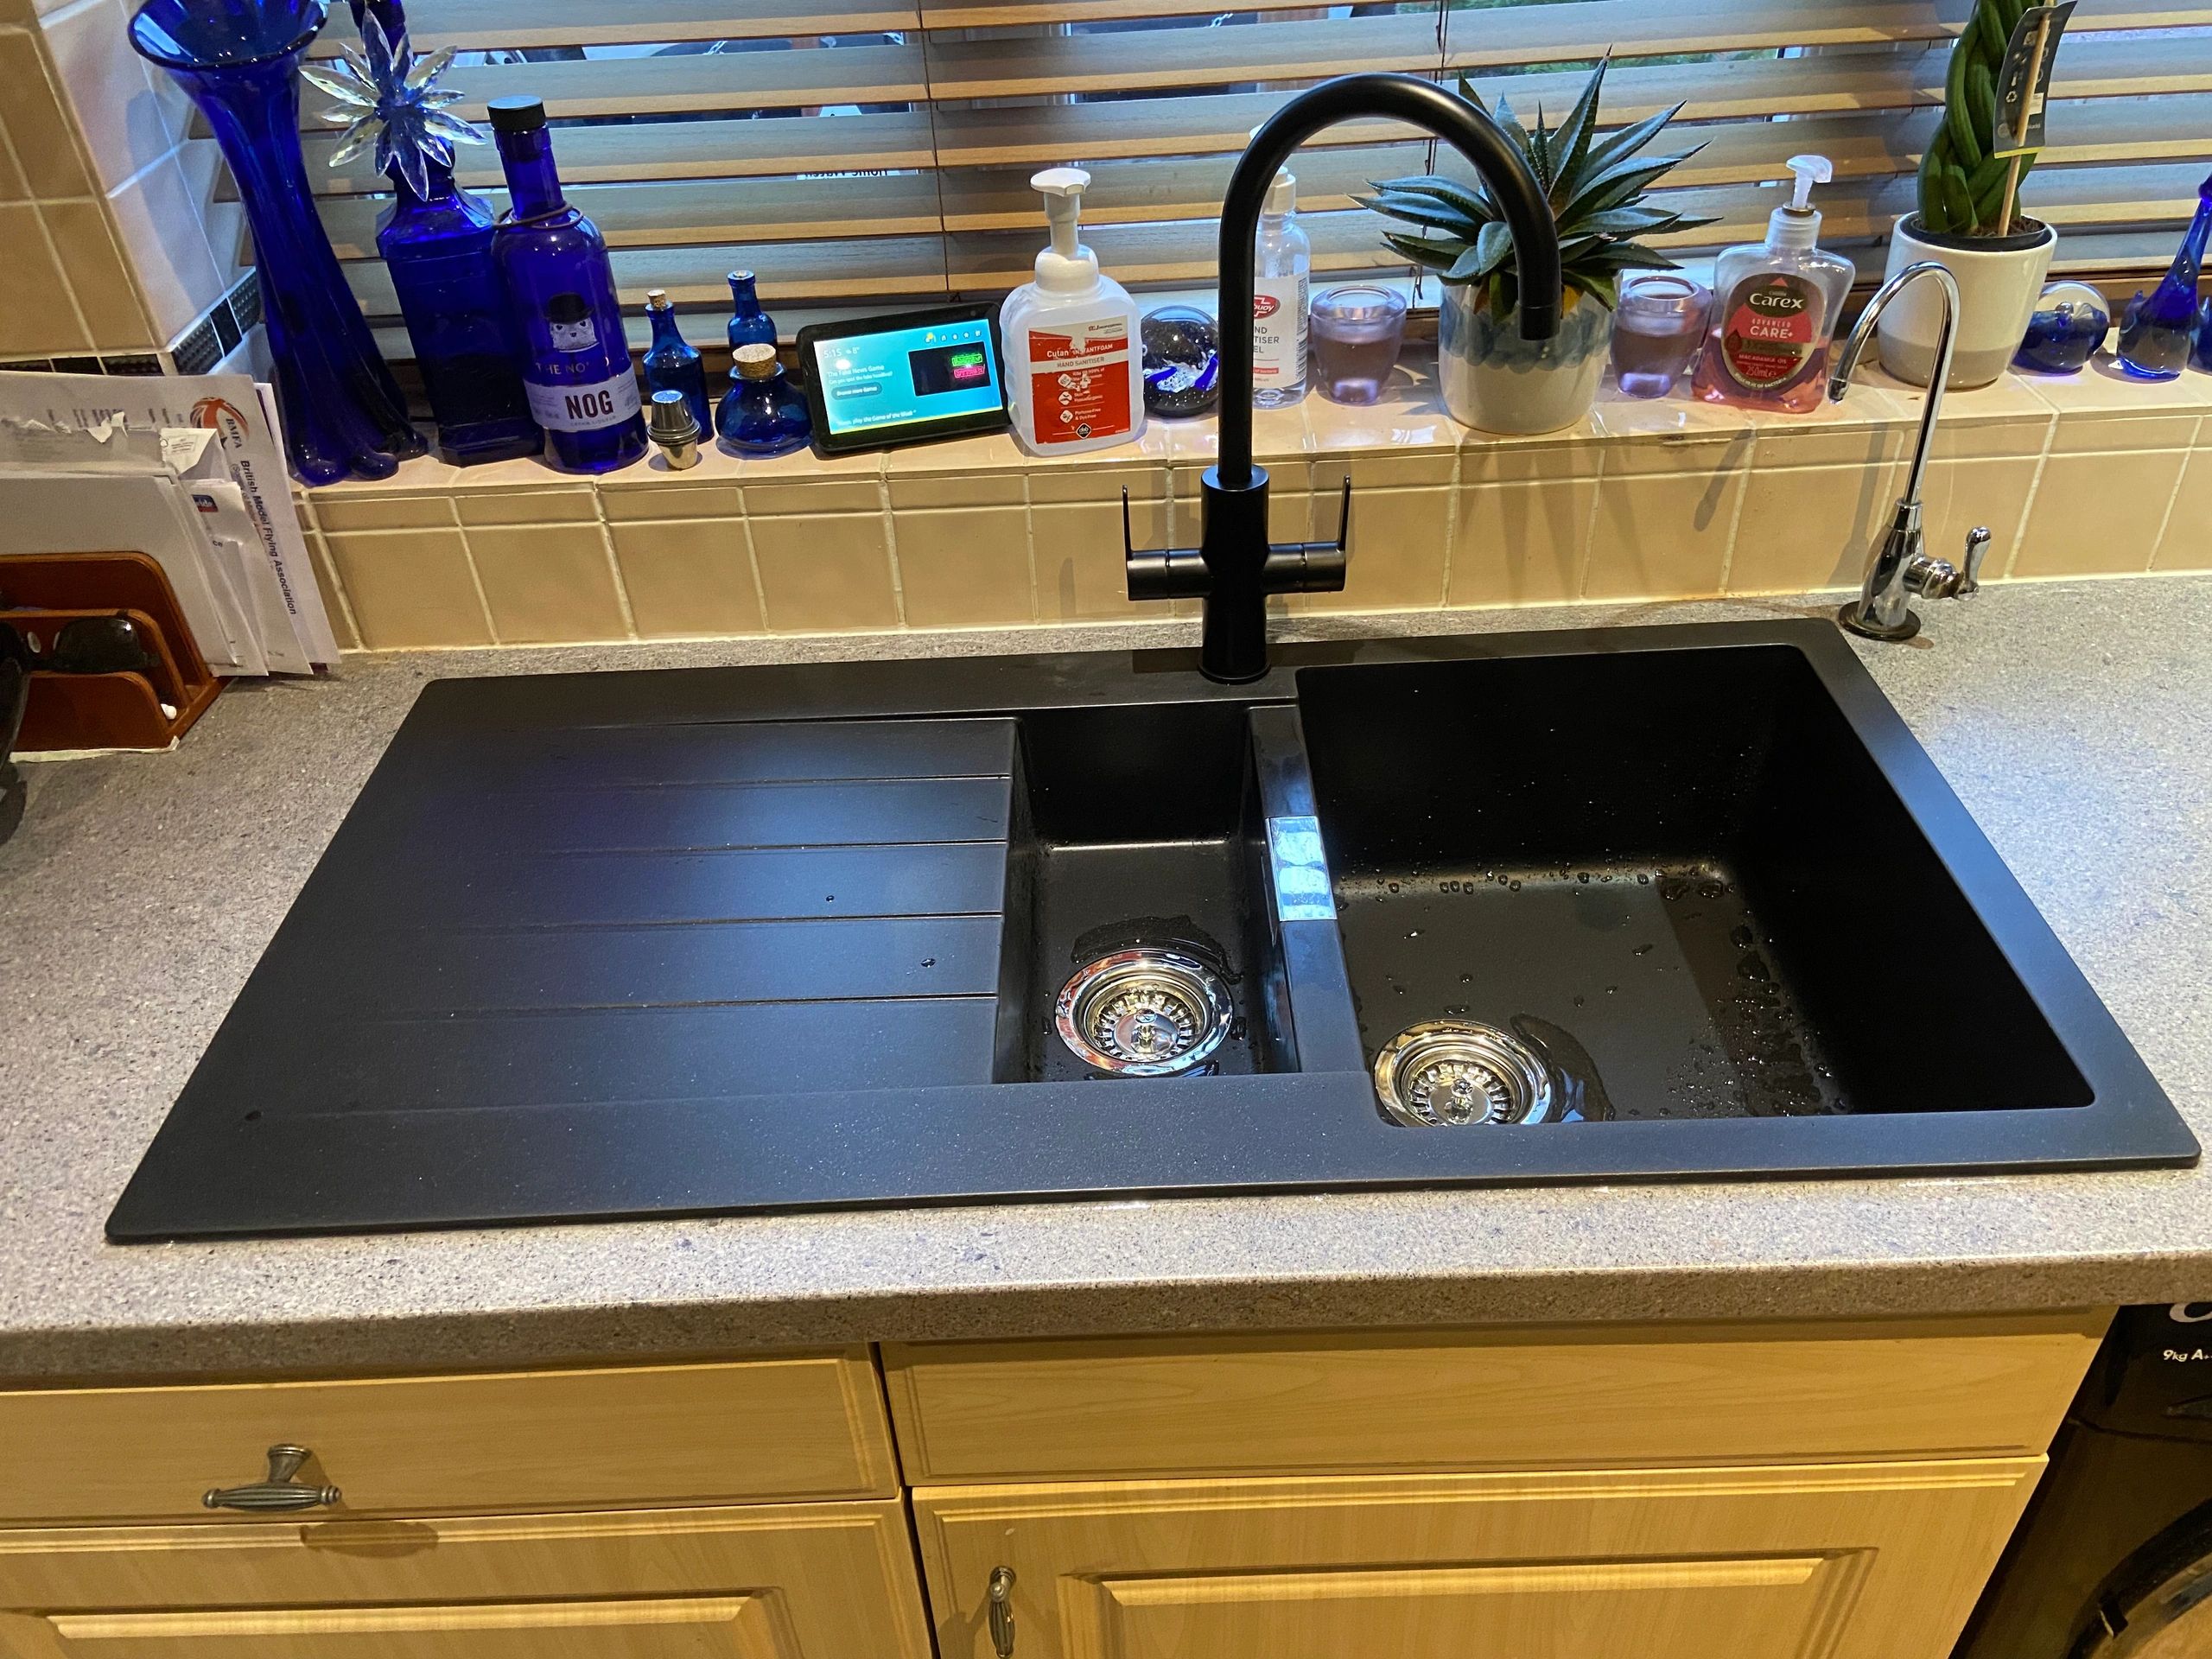 Kitchen sink replaced with water softener. 
Mr & Mrs W, Watton. 